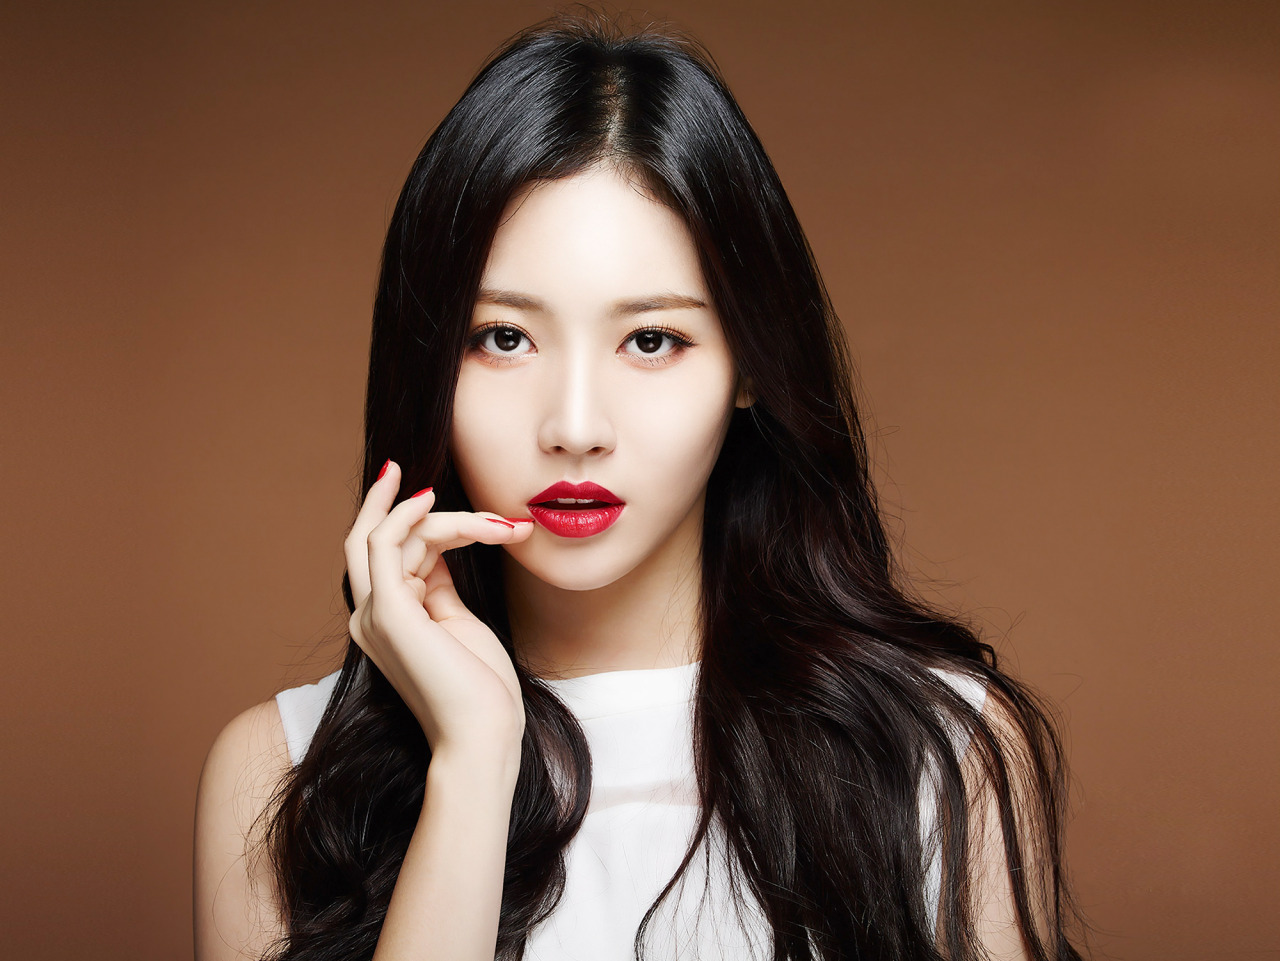 Model makeup kpop cosmetics Korean fashion cf lipstick hairstyle girl 